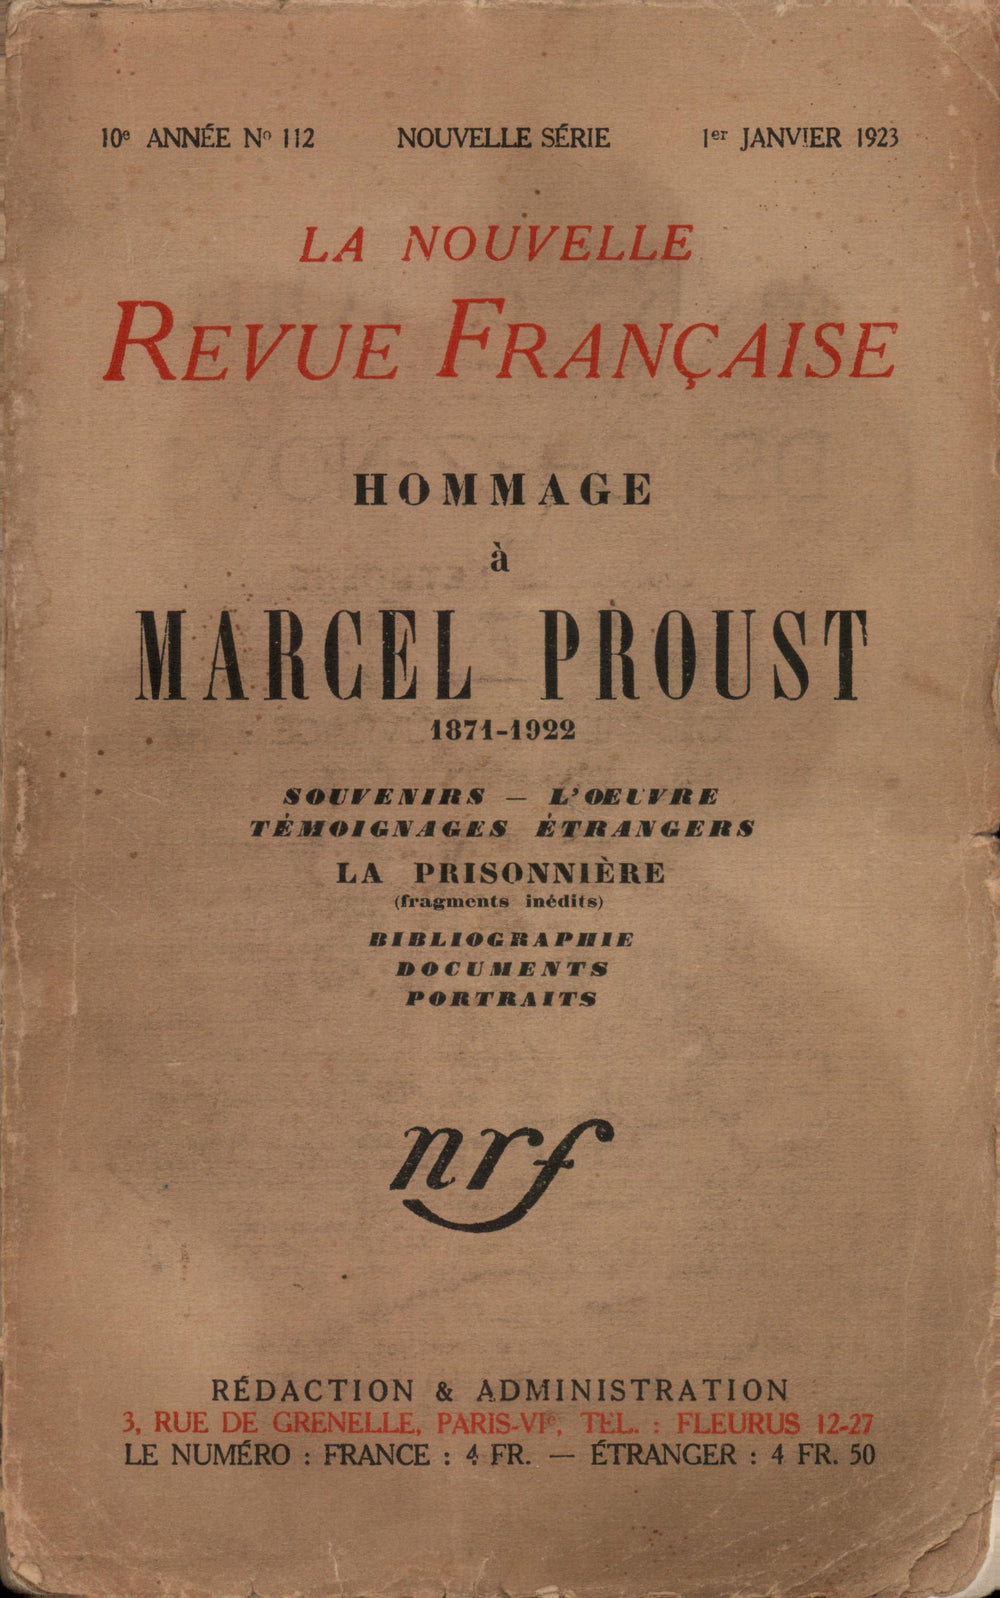 Hommage ŕ Marcel Proust (1871-1922) N' 112 (Janvier 1923)